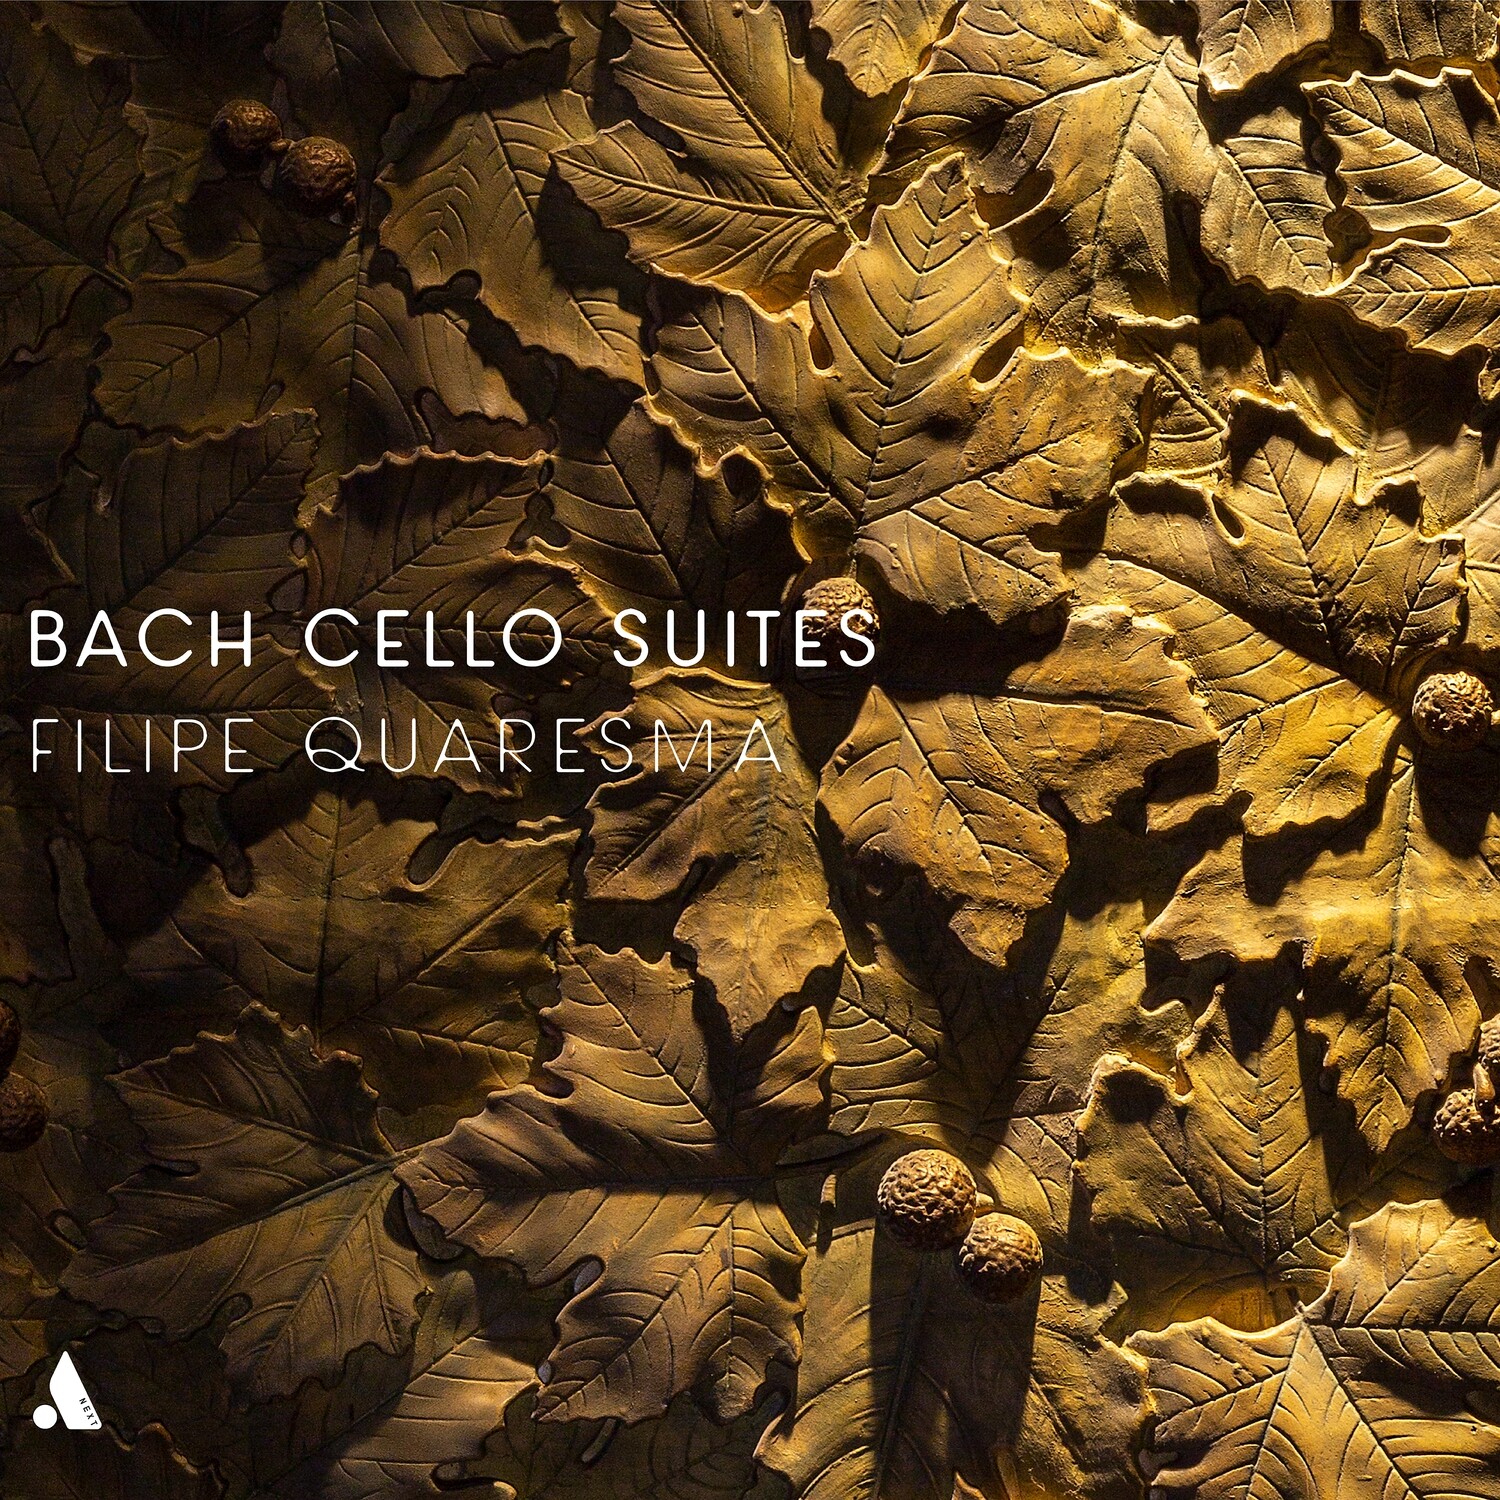 Bach Cello Suites Filipe Quaresma